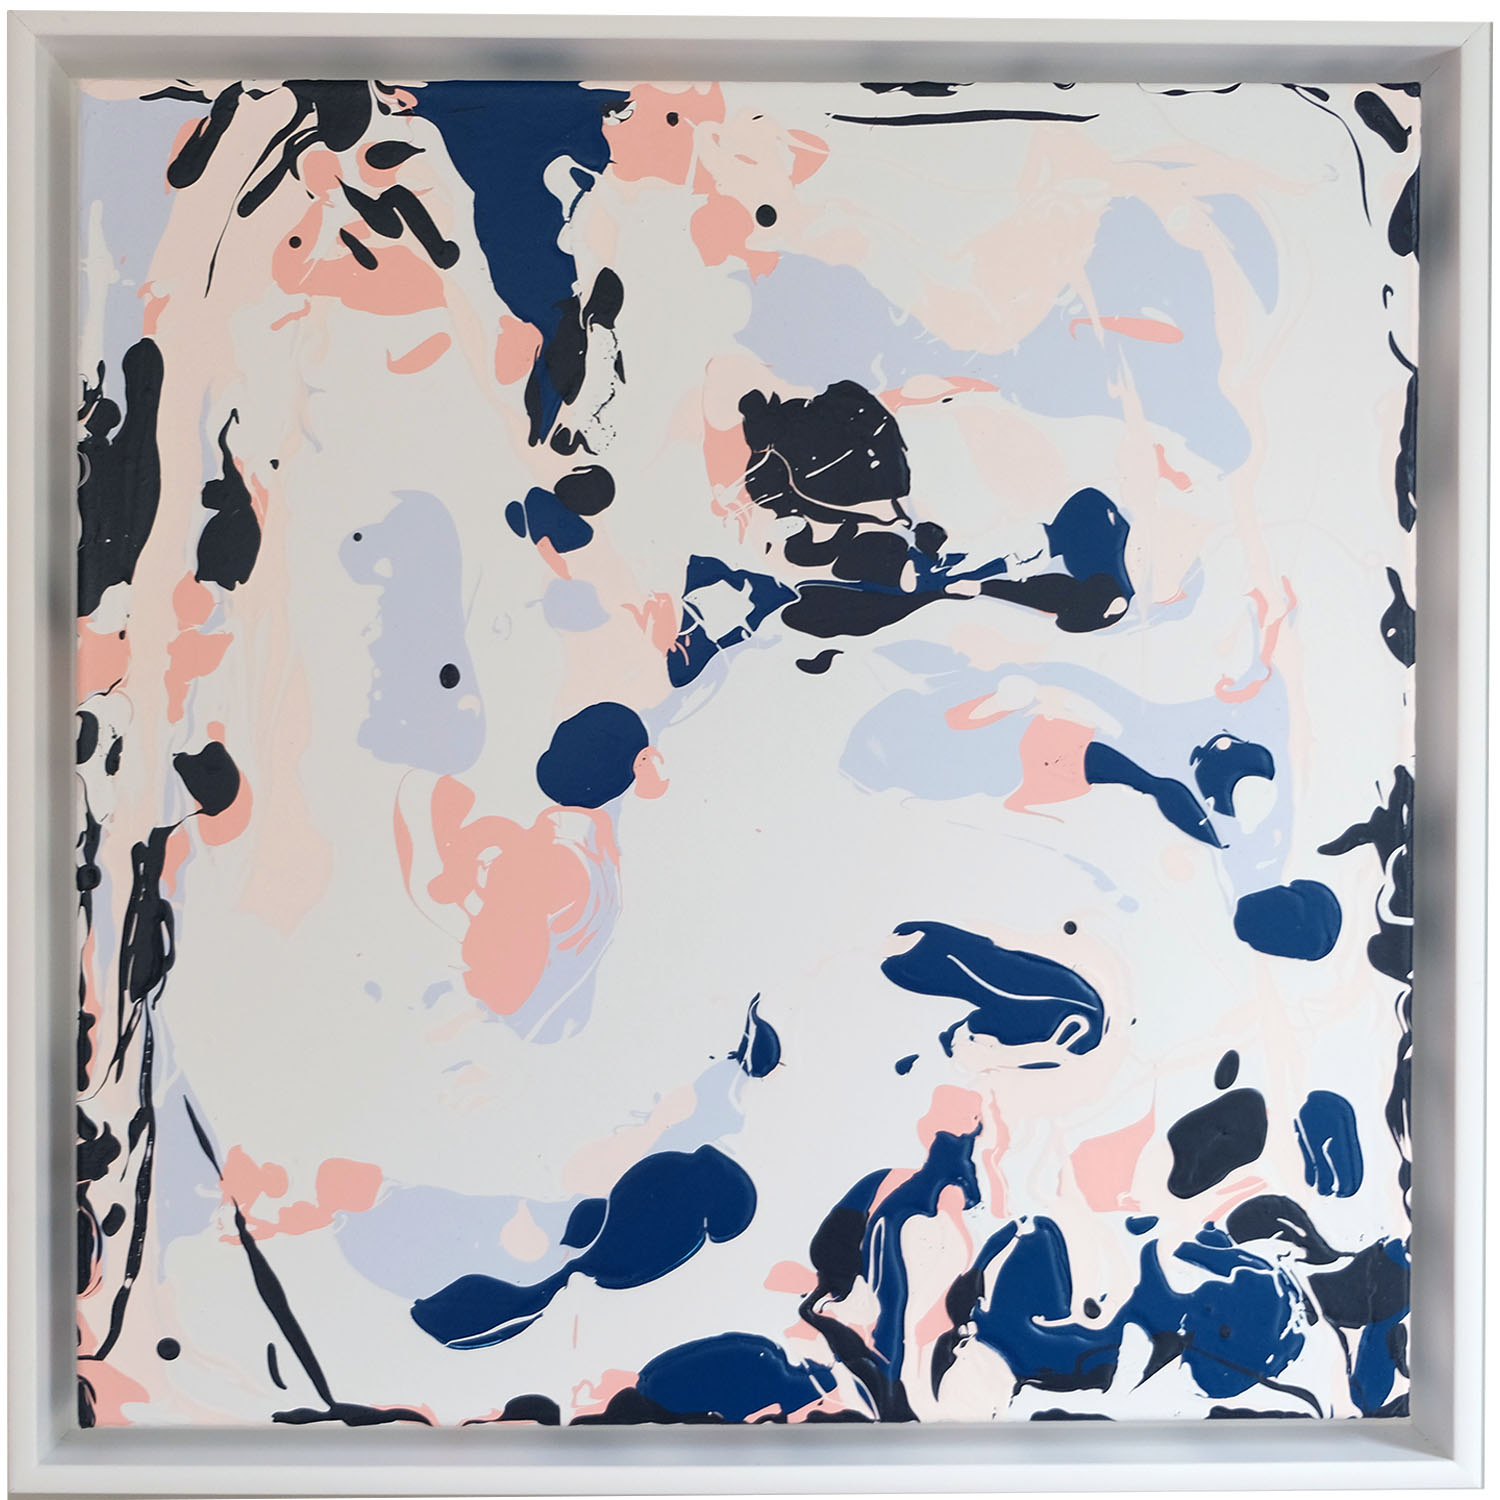 Ism Schism III is an original fluid painting by Caitlin Wheeler abstract Art